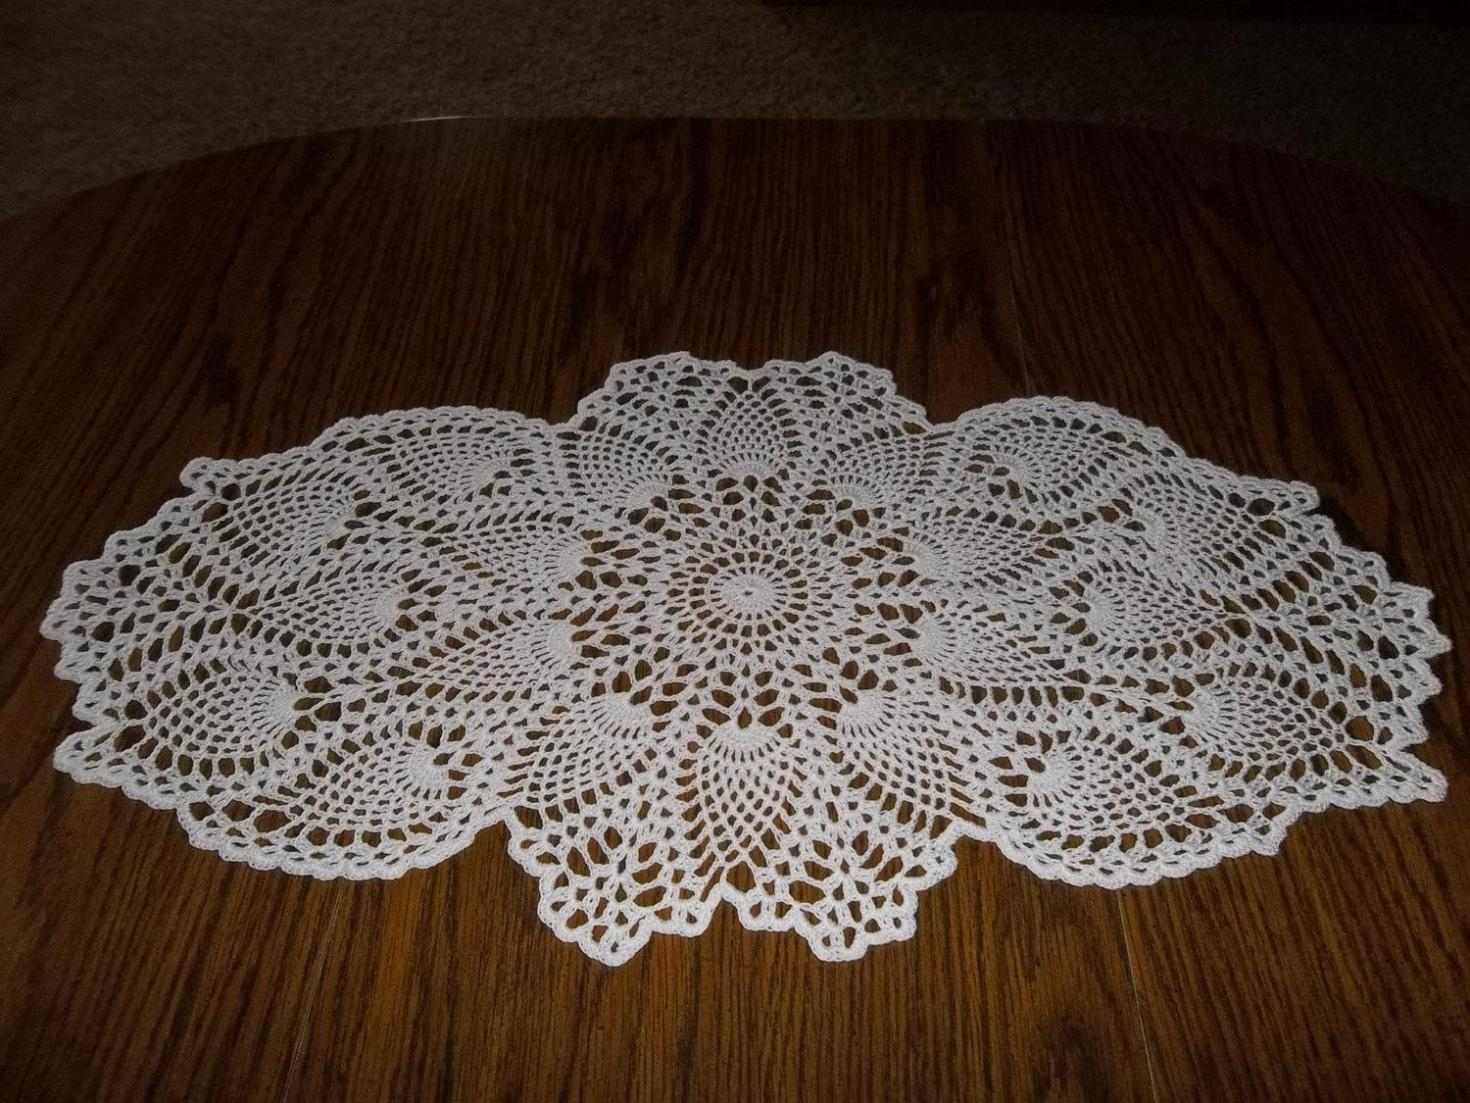 Free Crochet Table Runner Patterns Just For You 17 Crochet Table Runner Patterns For Beginners